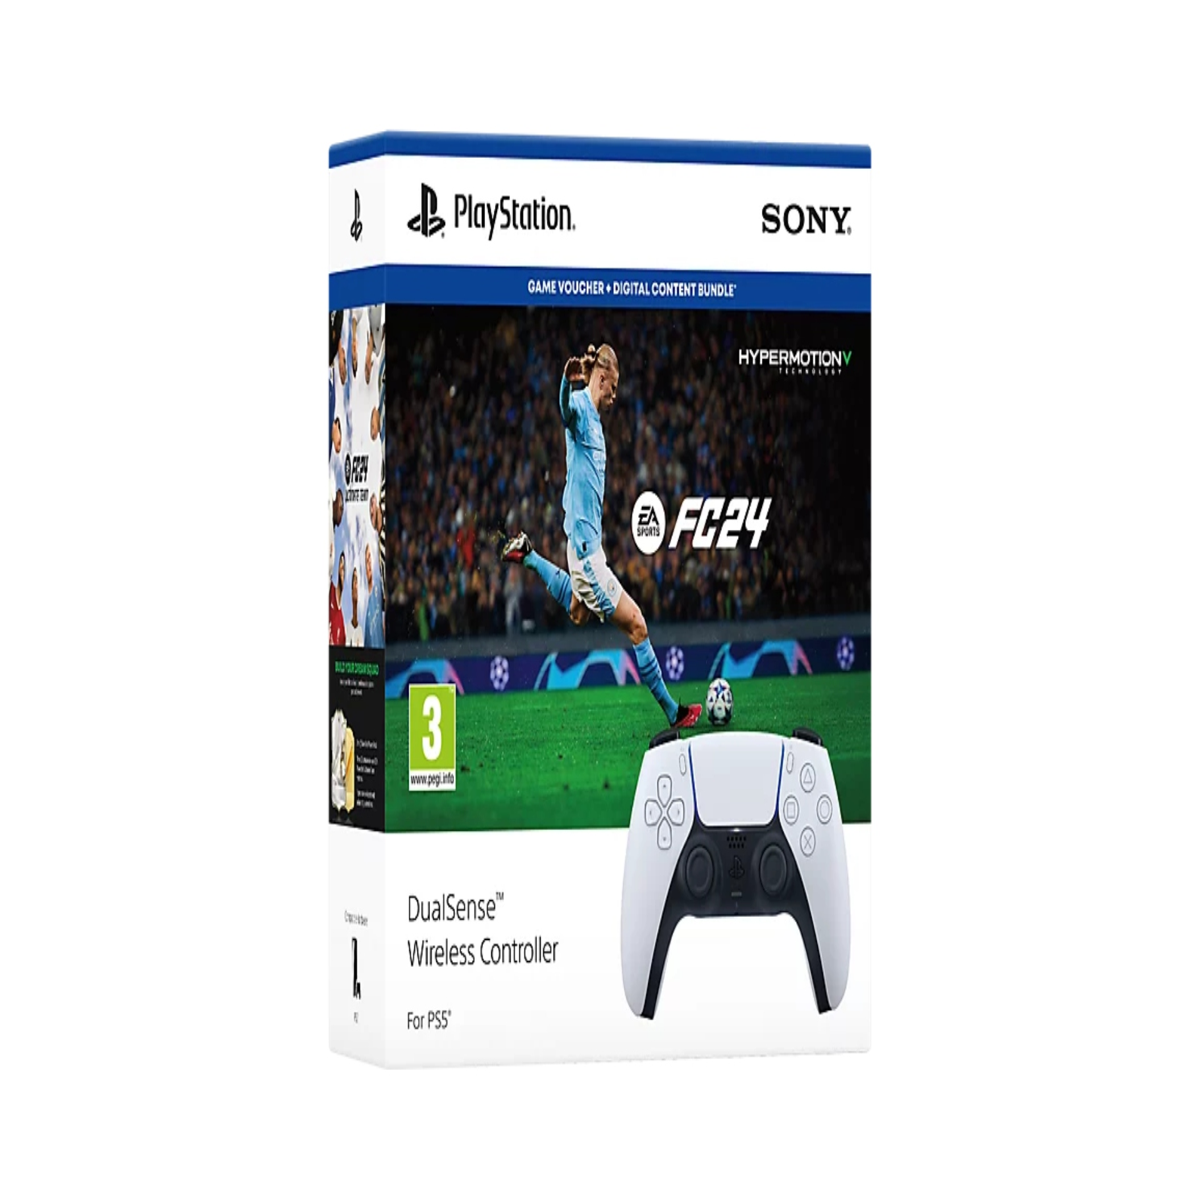 EA Sports FC 24 Best Controller Settings Guide